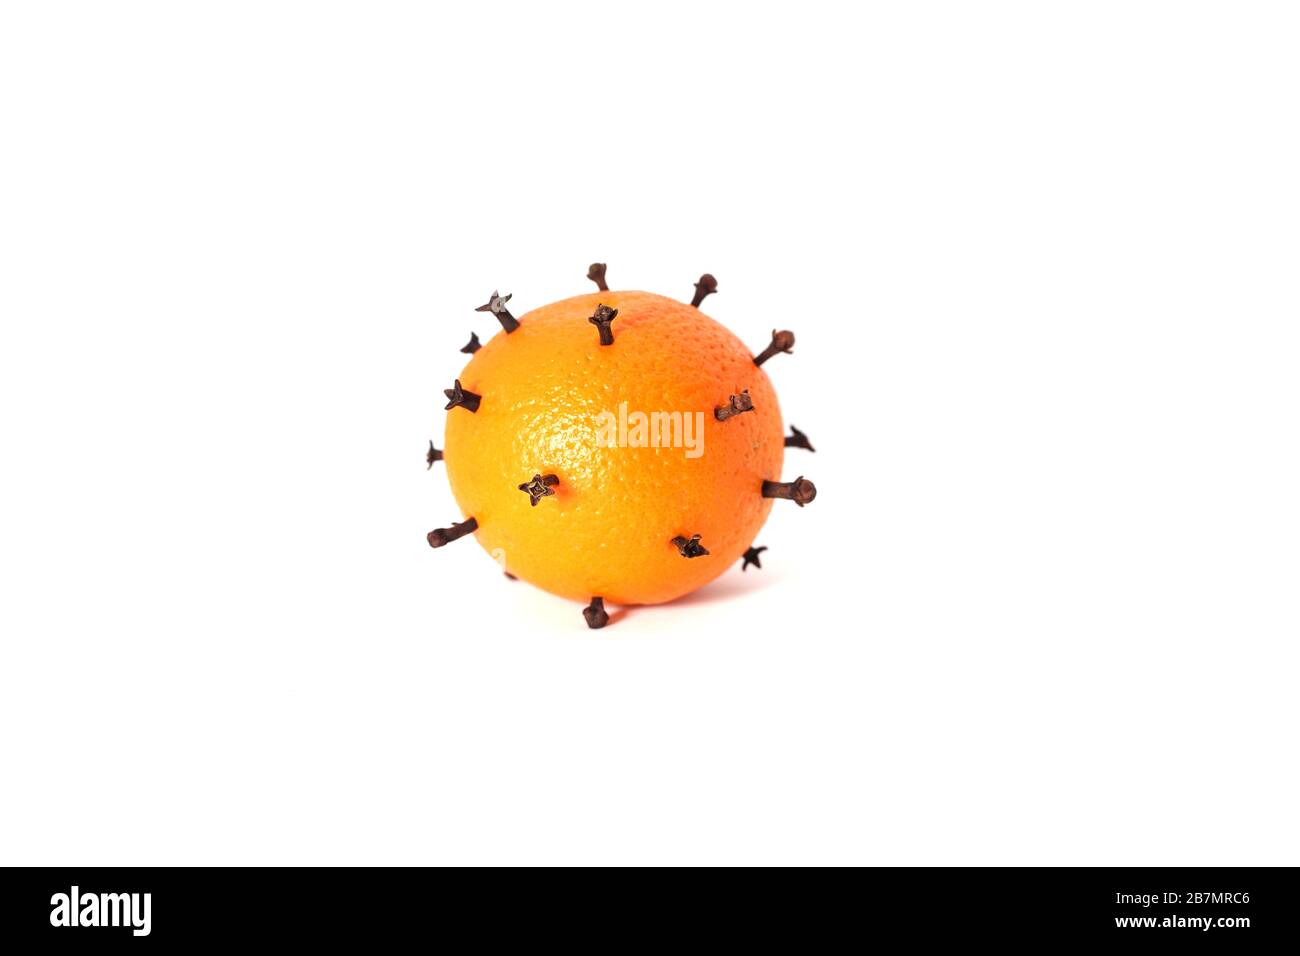 Orange fruit spiked with cloves that looks like a Corona virus Stock Photo